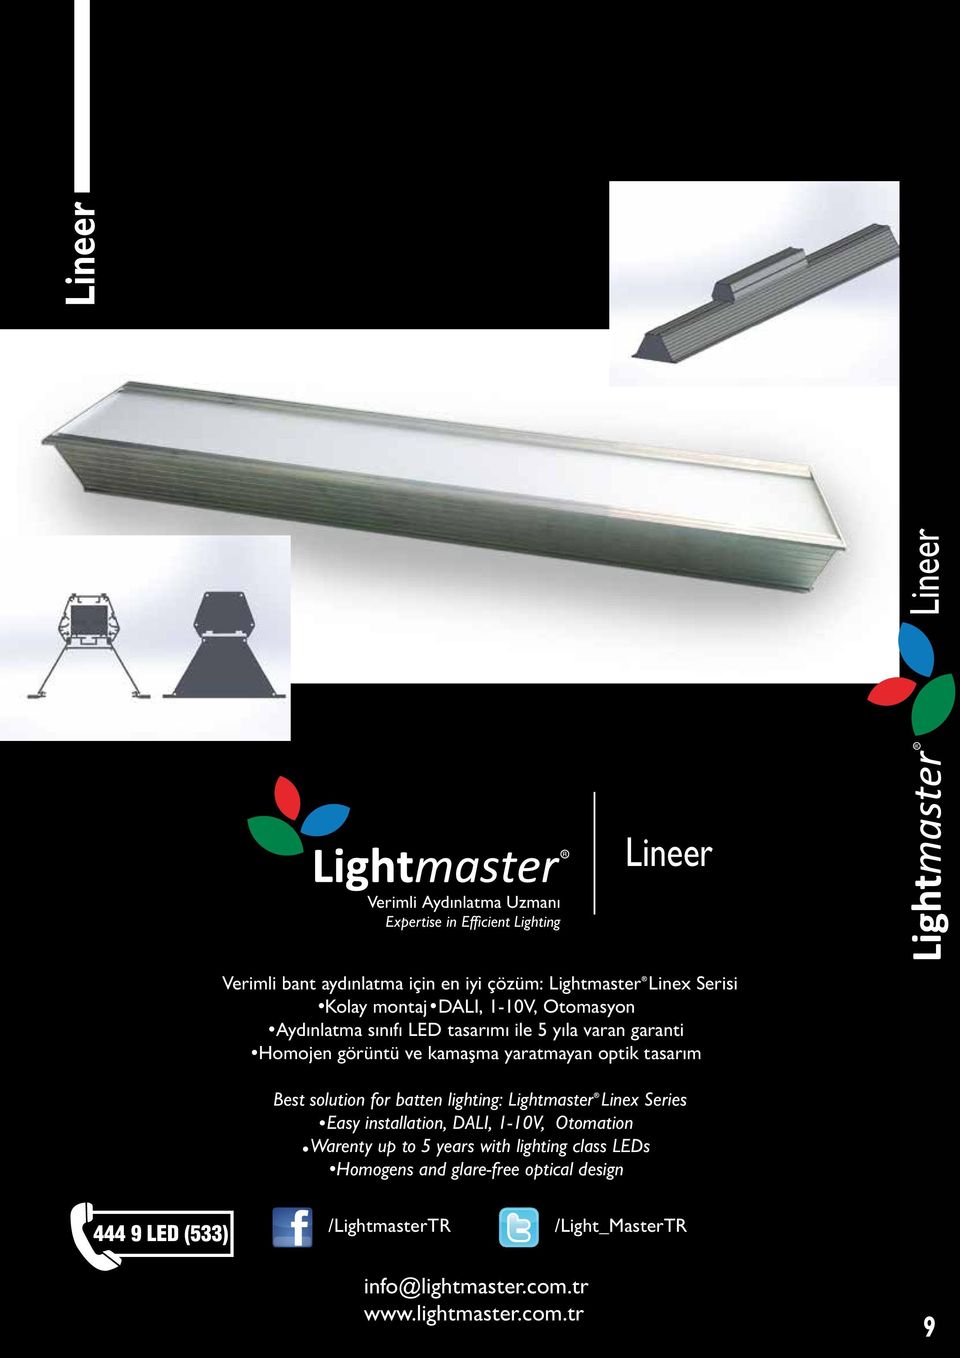 yaratmayan optik tasarım Best solution for batten lighting: Lightmaster Linex Series Easy installation, DALI, 1-10V, Otomation